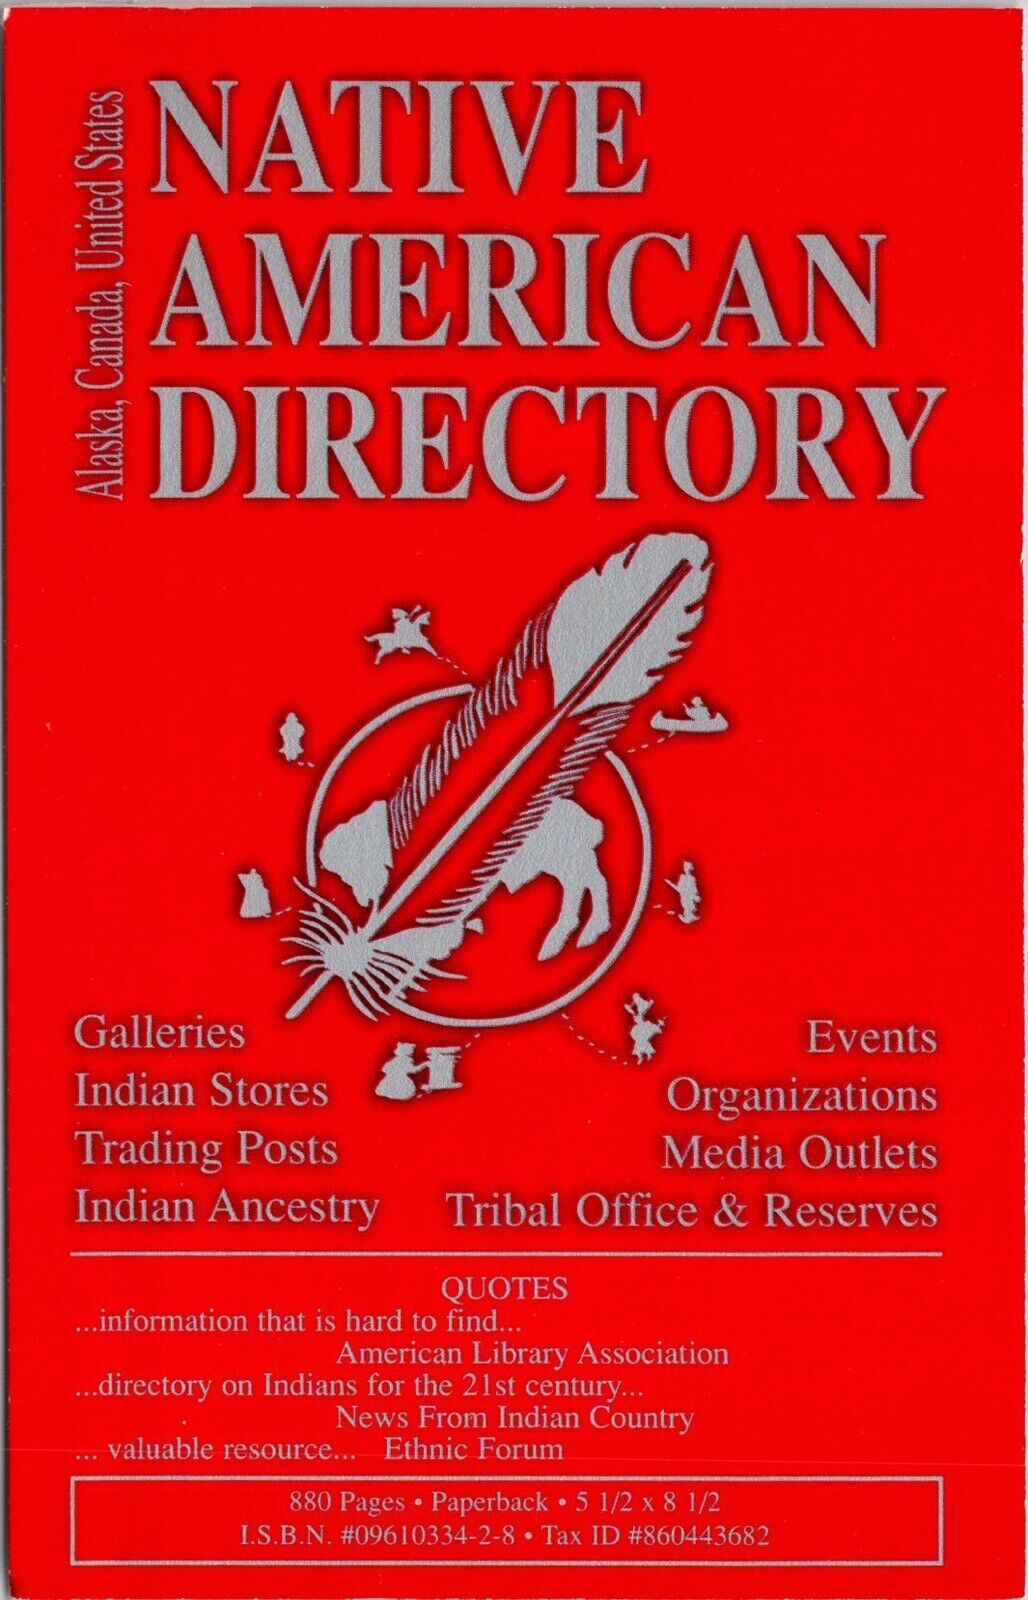 Vtg 1980s Promotional Postcard Native American Directory Alaska US Canada Unused